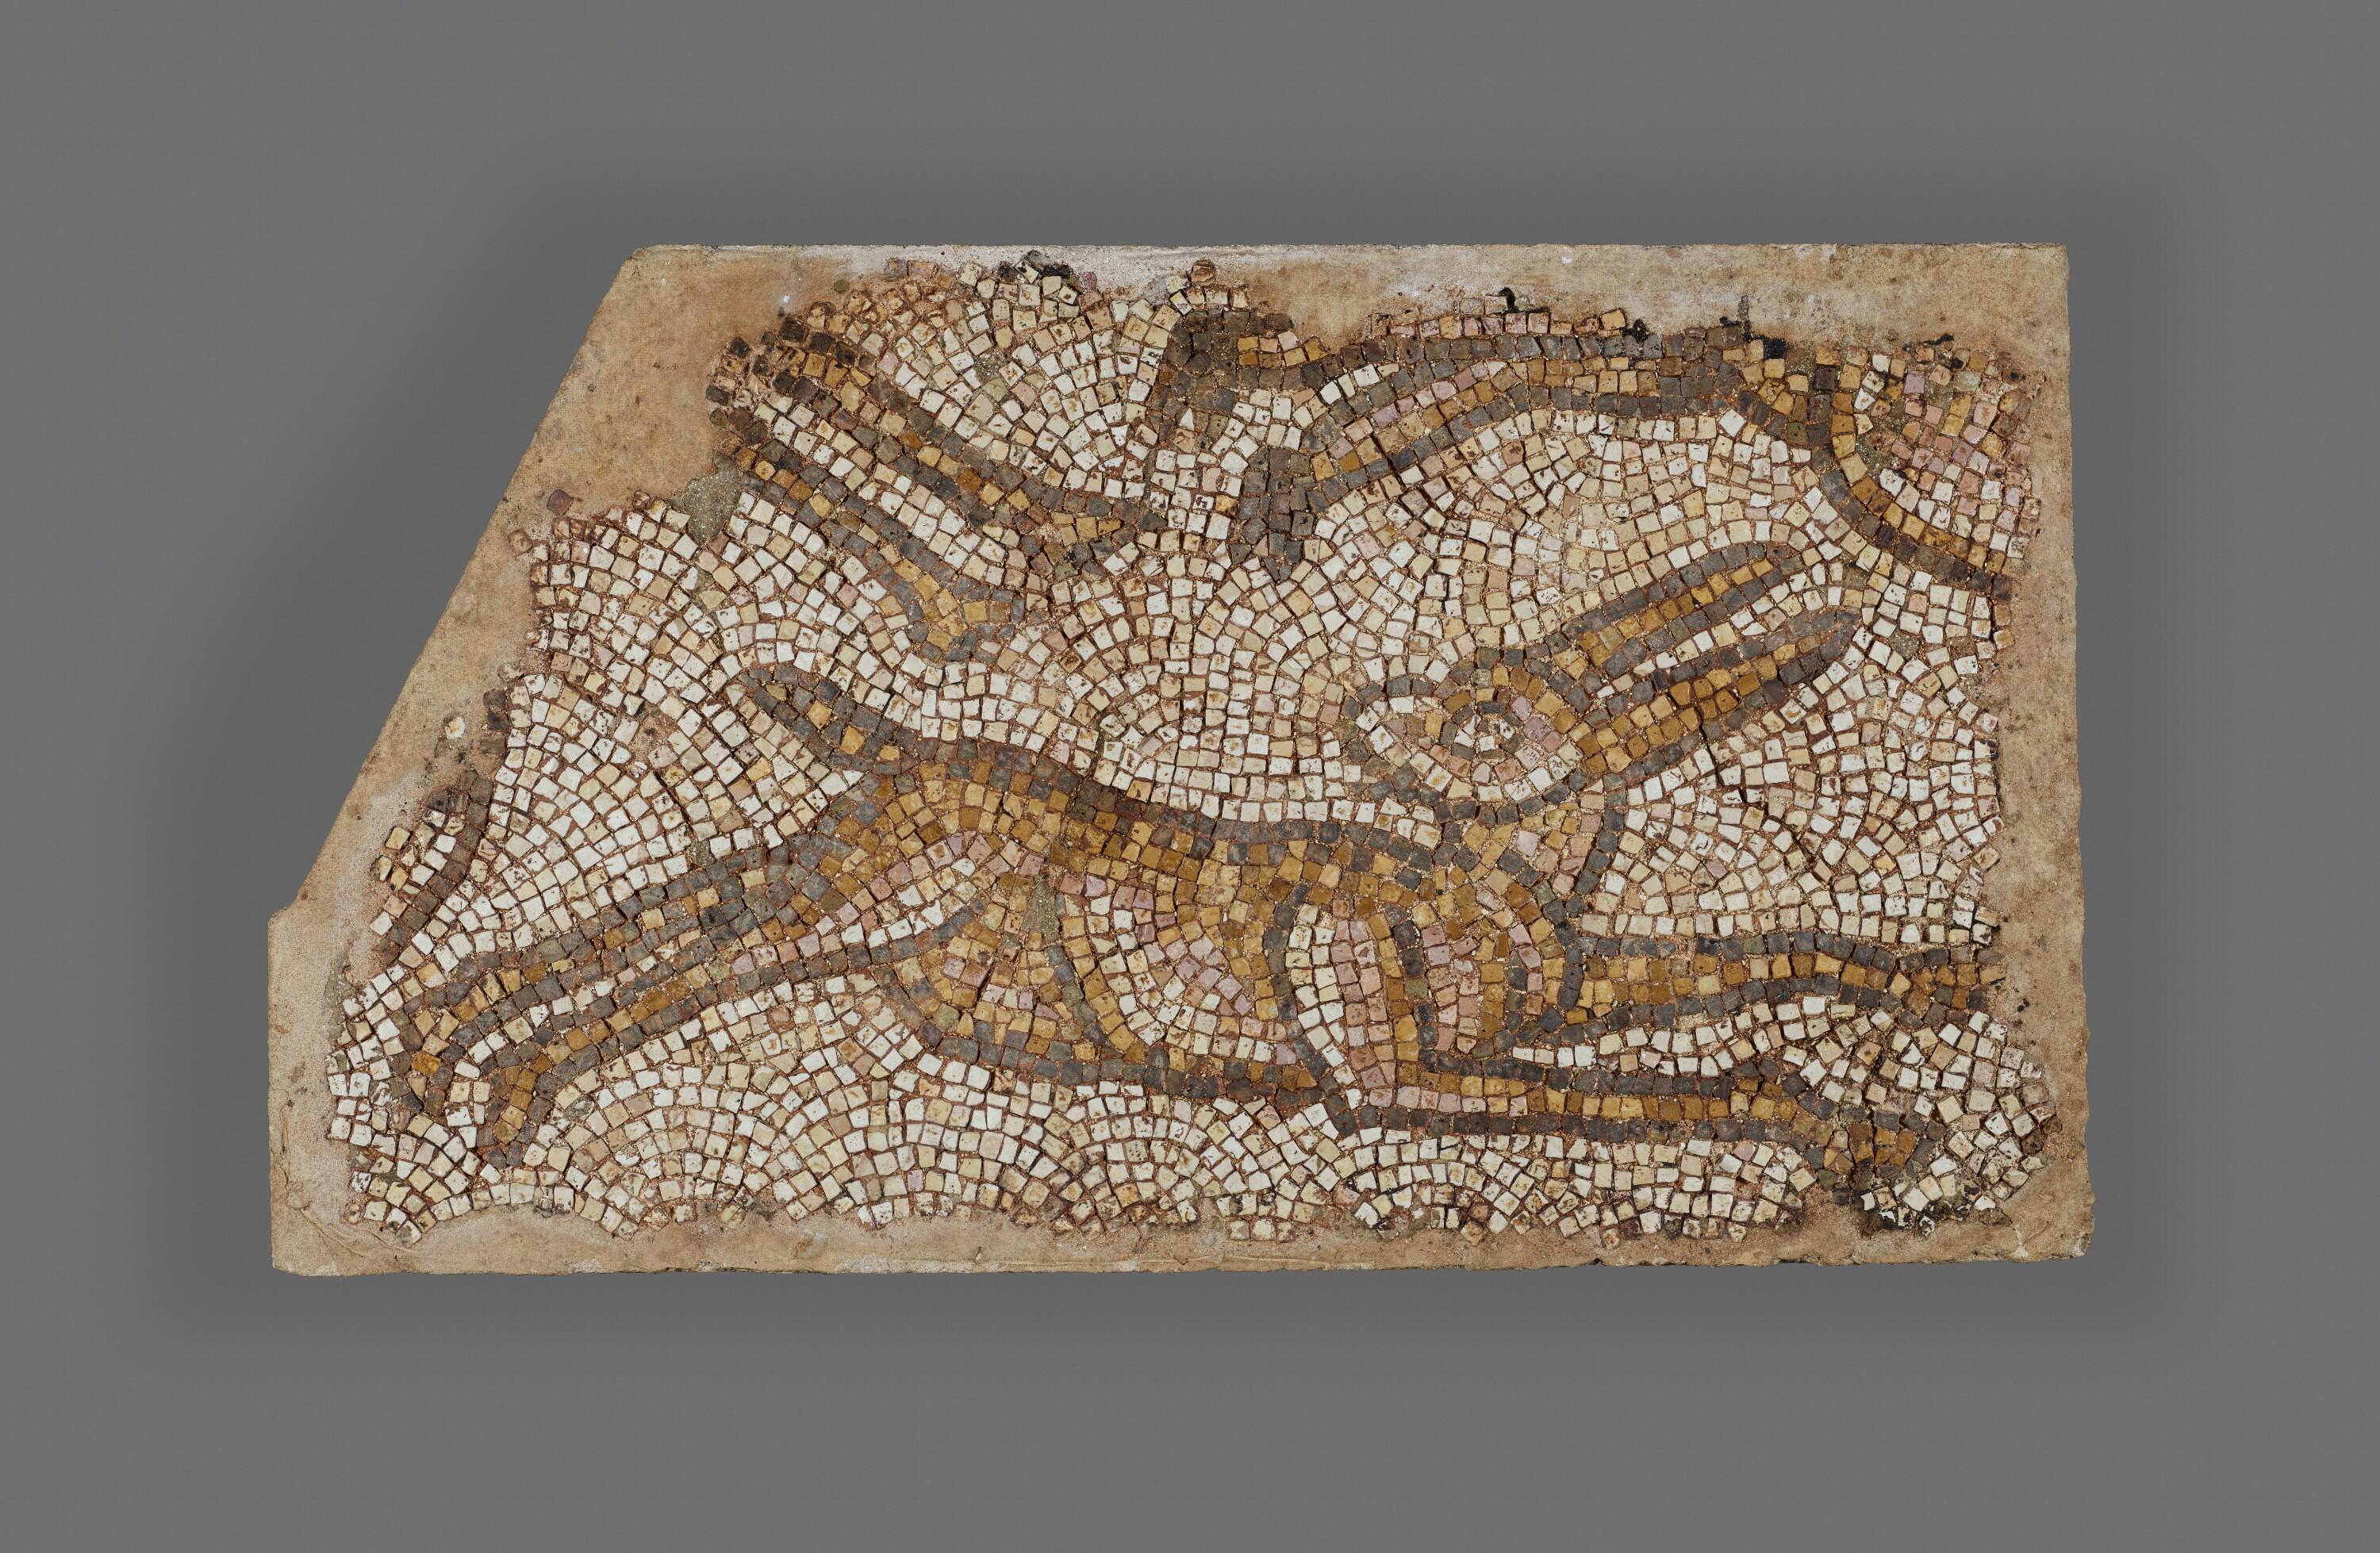 Mosaic of a rabbit